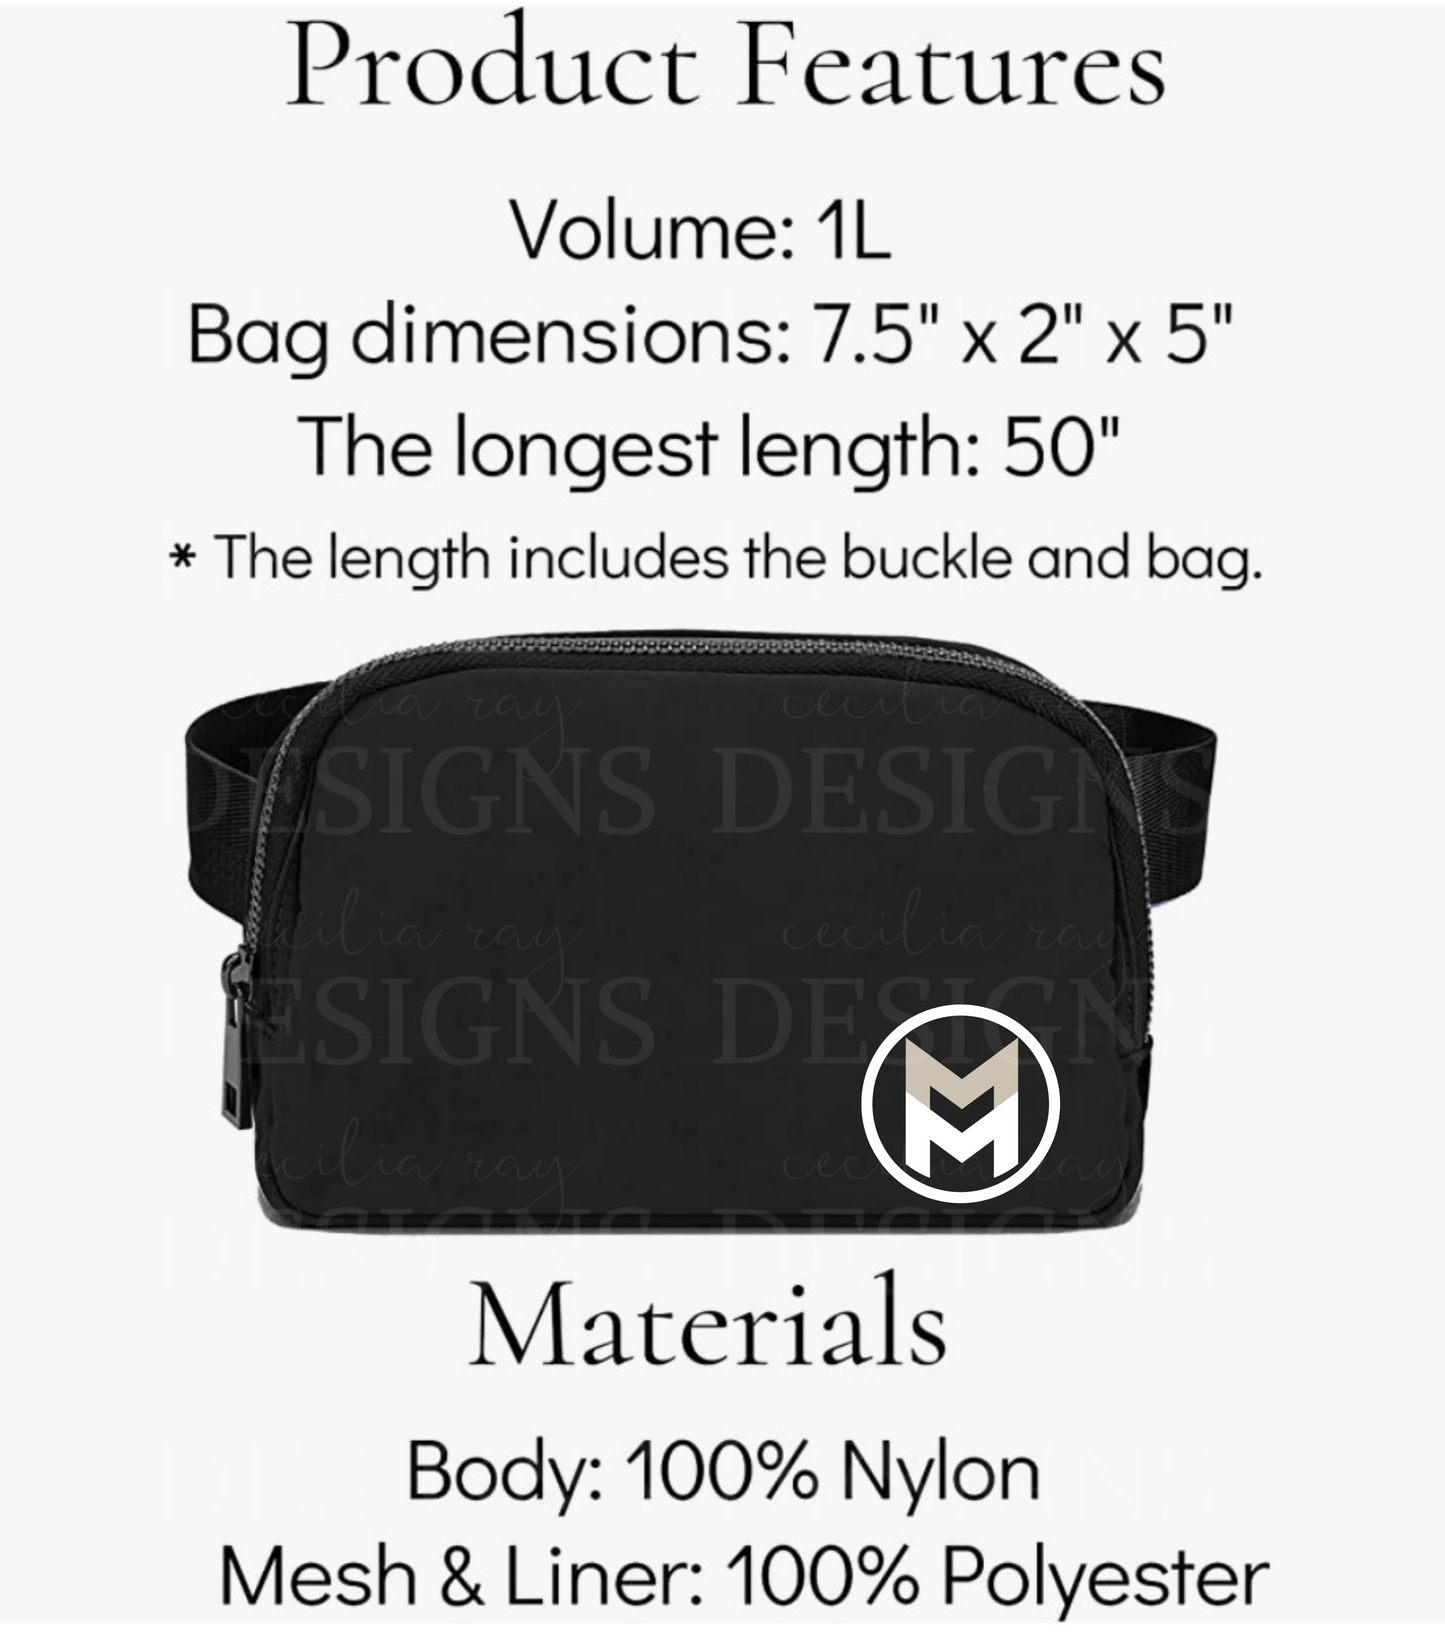 Mudita Movement Crossbody/Belt Bag